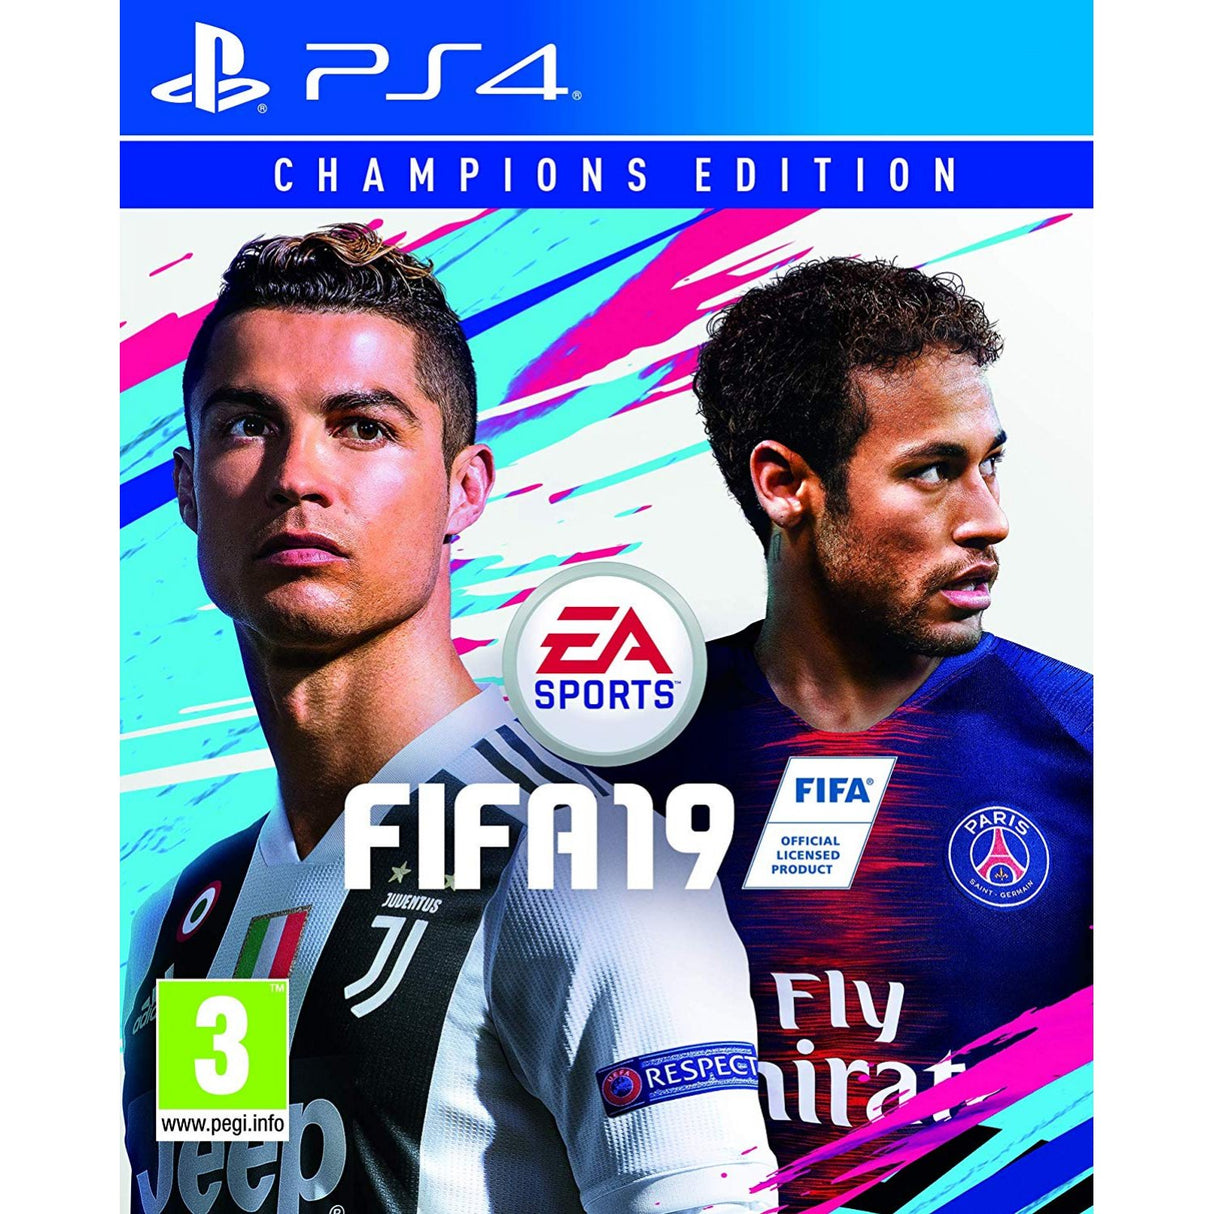 FIFA 19 Champions Edition - PS4 (GRADE A)